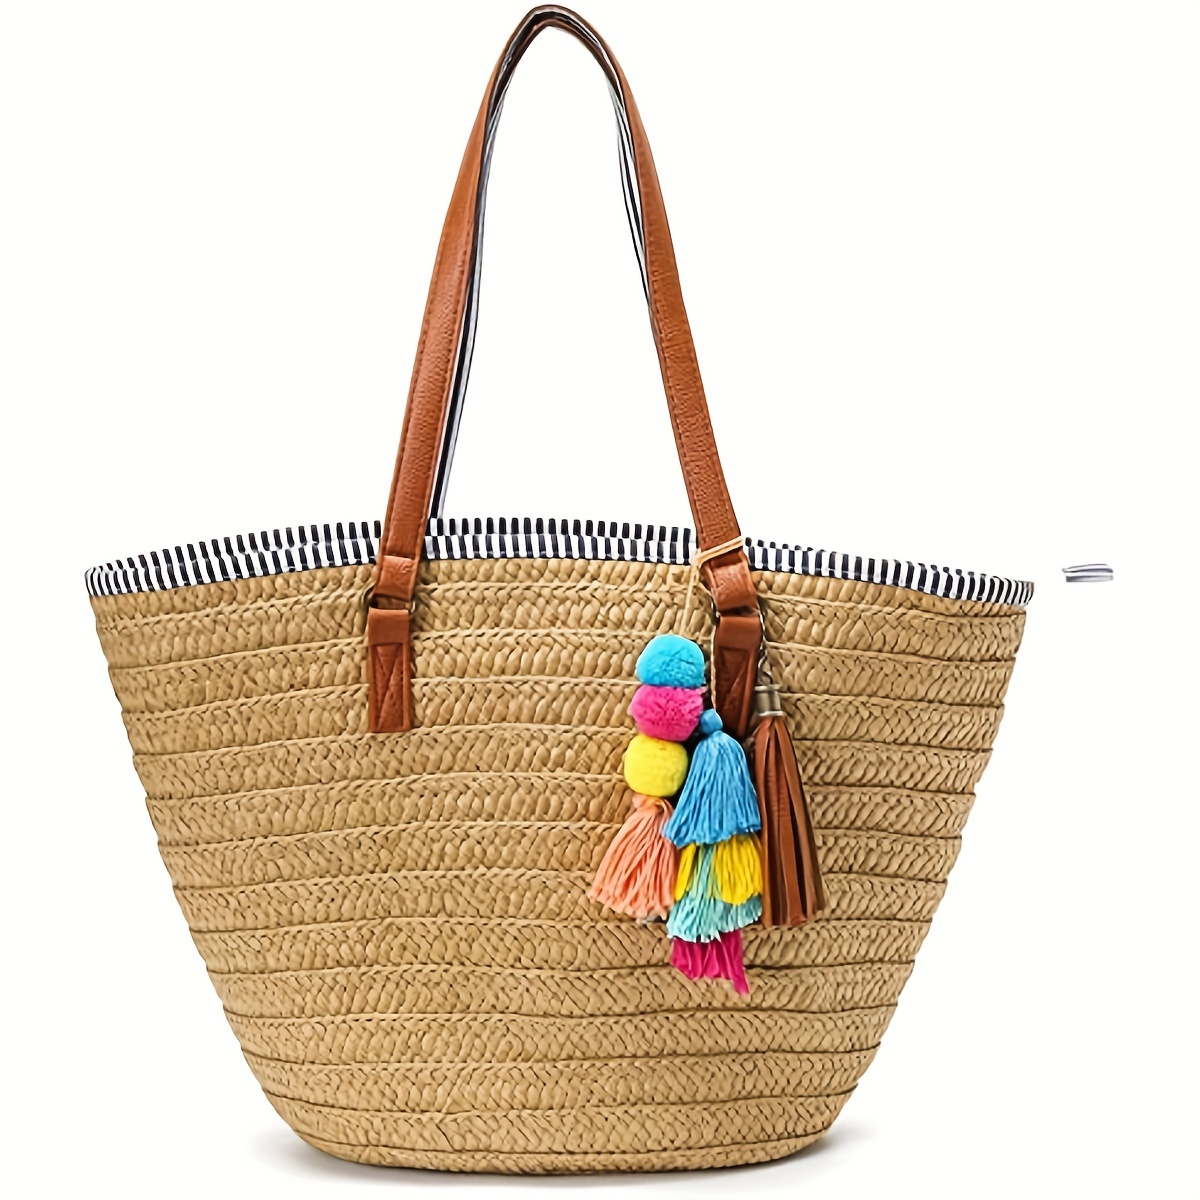 Straw Beach Shoulder Bag Summer Beach Tote with Colorful Pom Pom